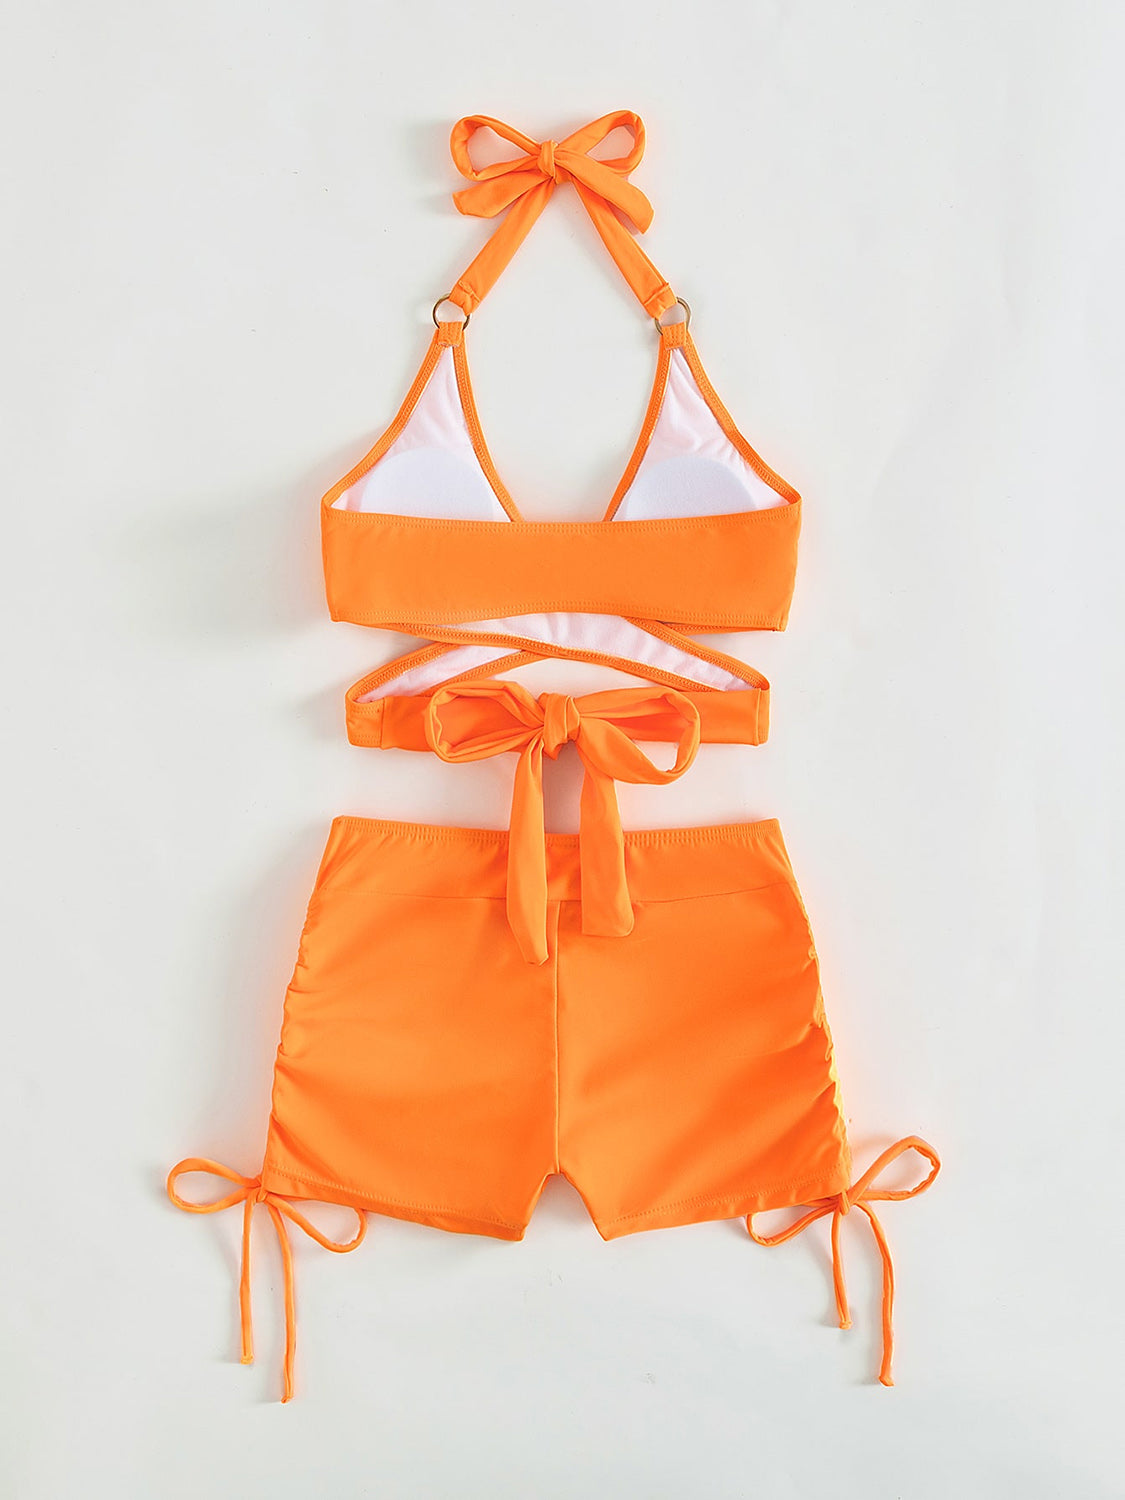 an orange and white bikini top and shorts